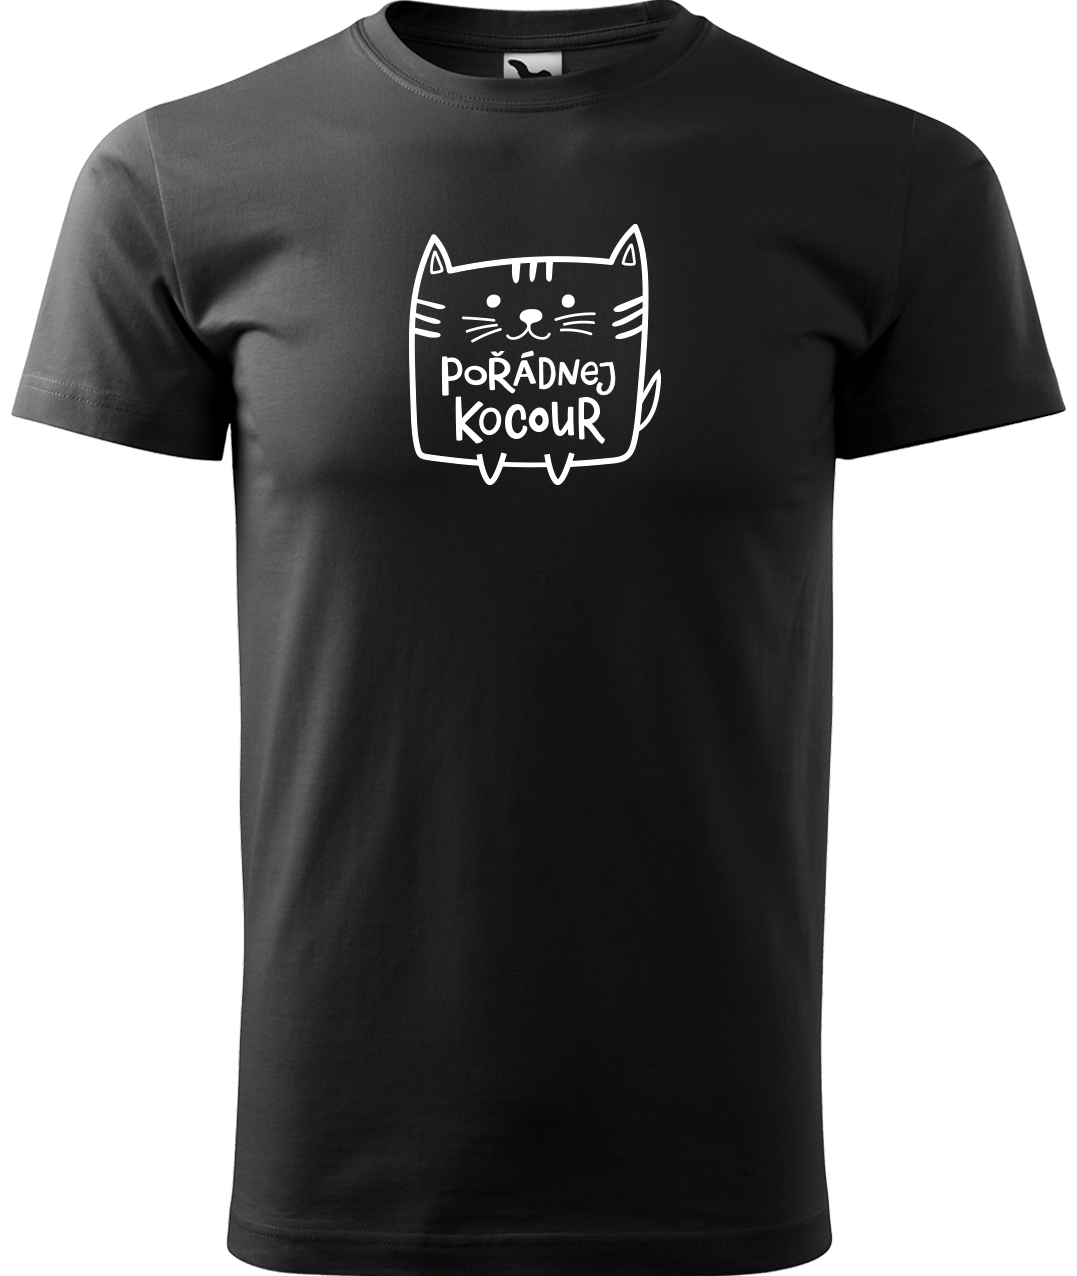 Pánské tričko s kočkou - Pořádnej kocour Velikost: L, Barva: Černá (01)